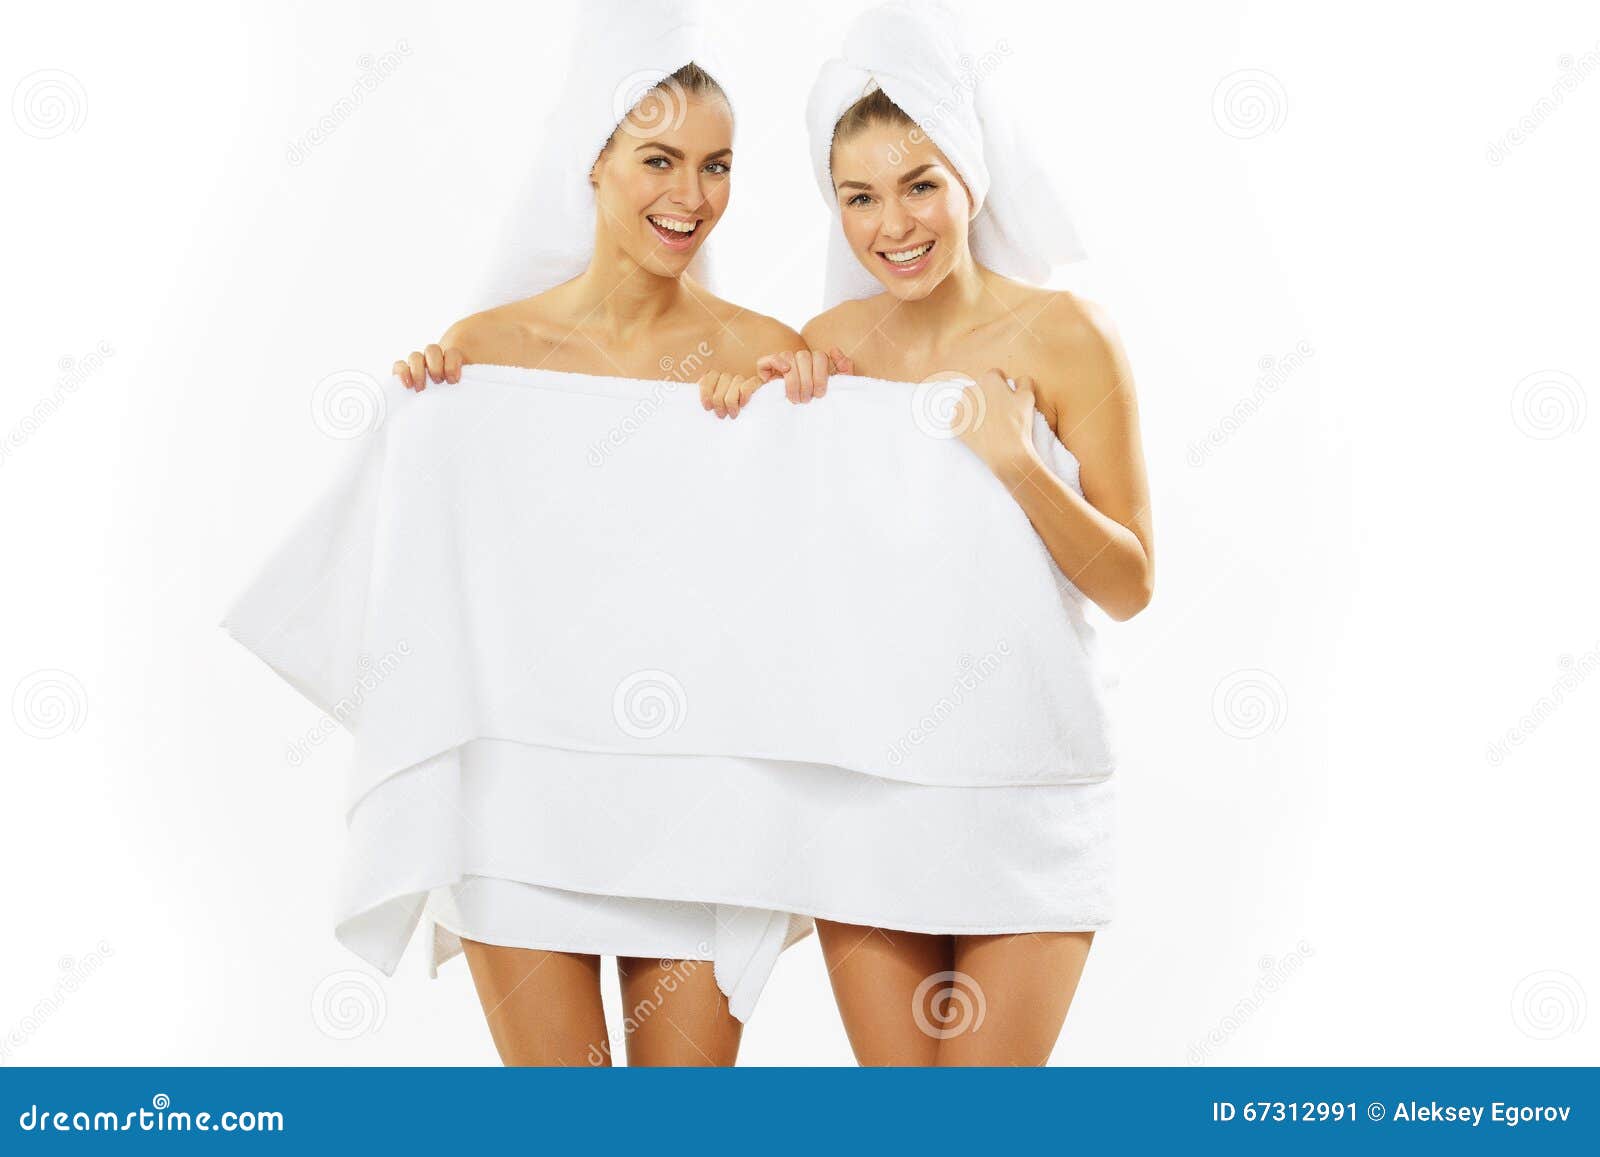 Танцует полотенце